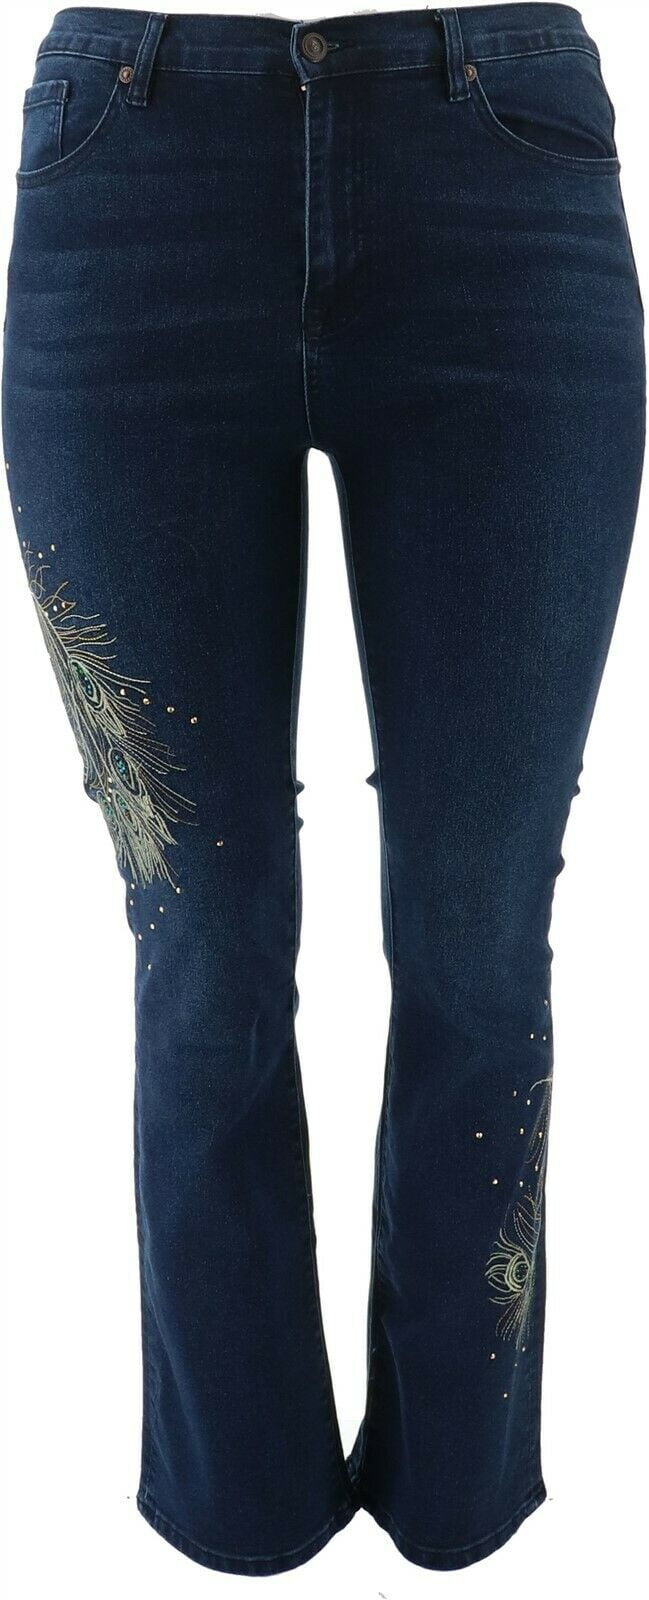 diane gilman peacock jeans